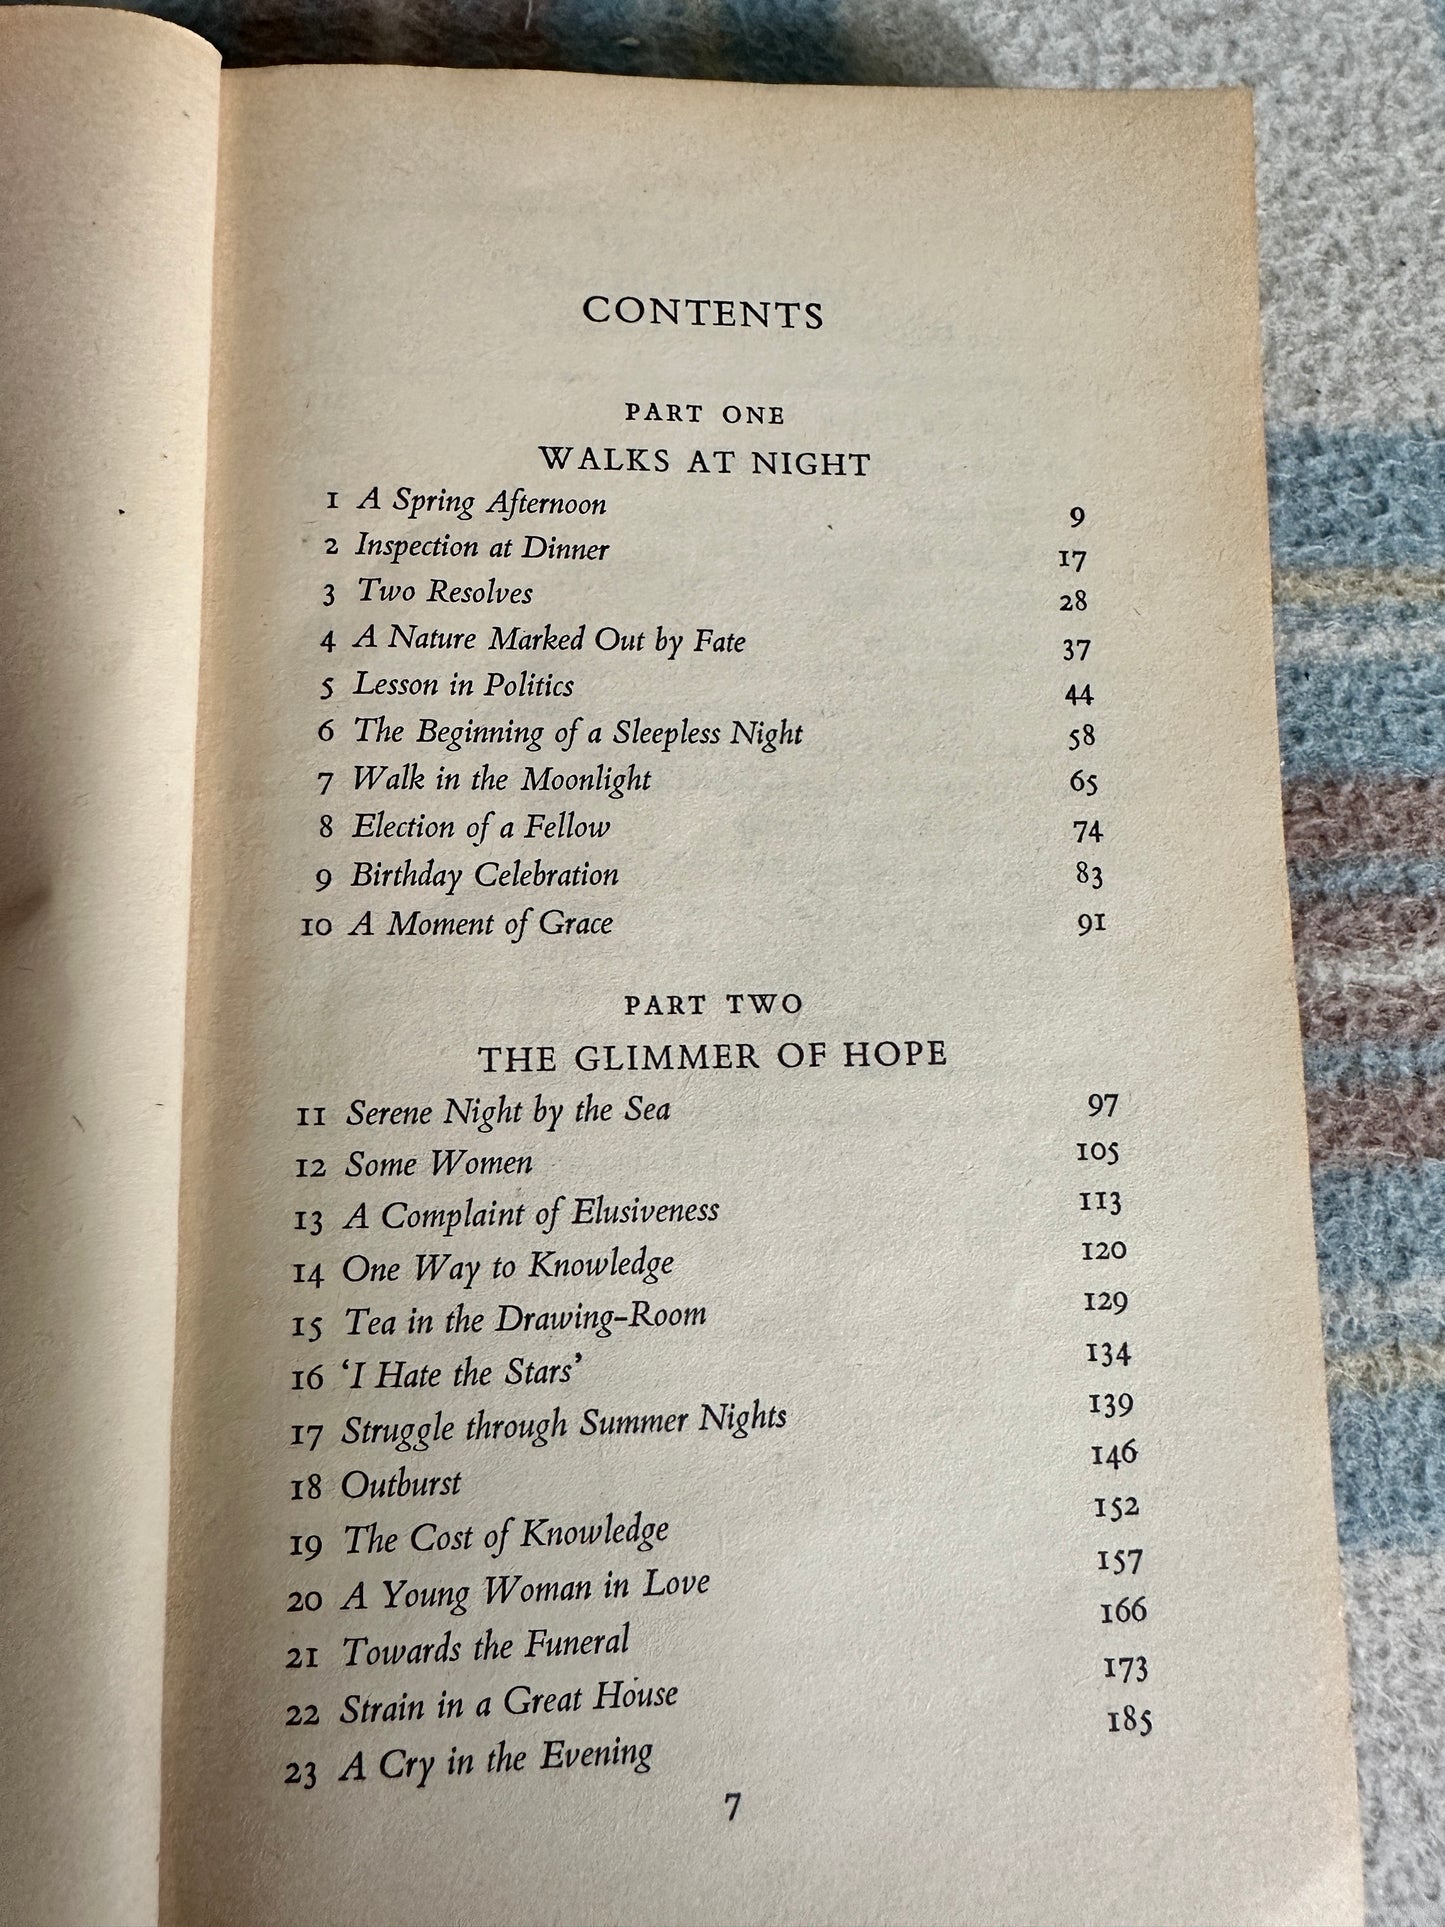 1965 The Light & The Dark - C. P. Snow(Penguin Books)